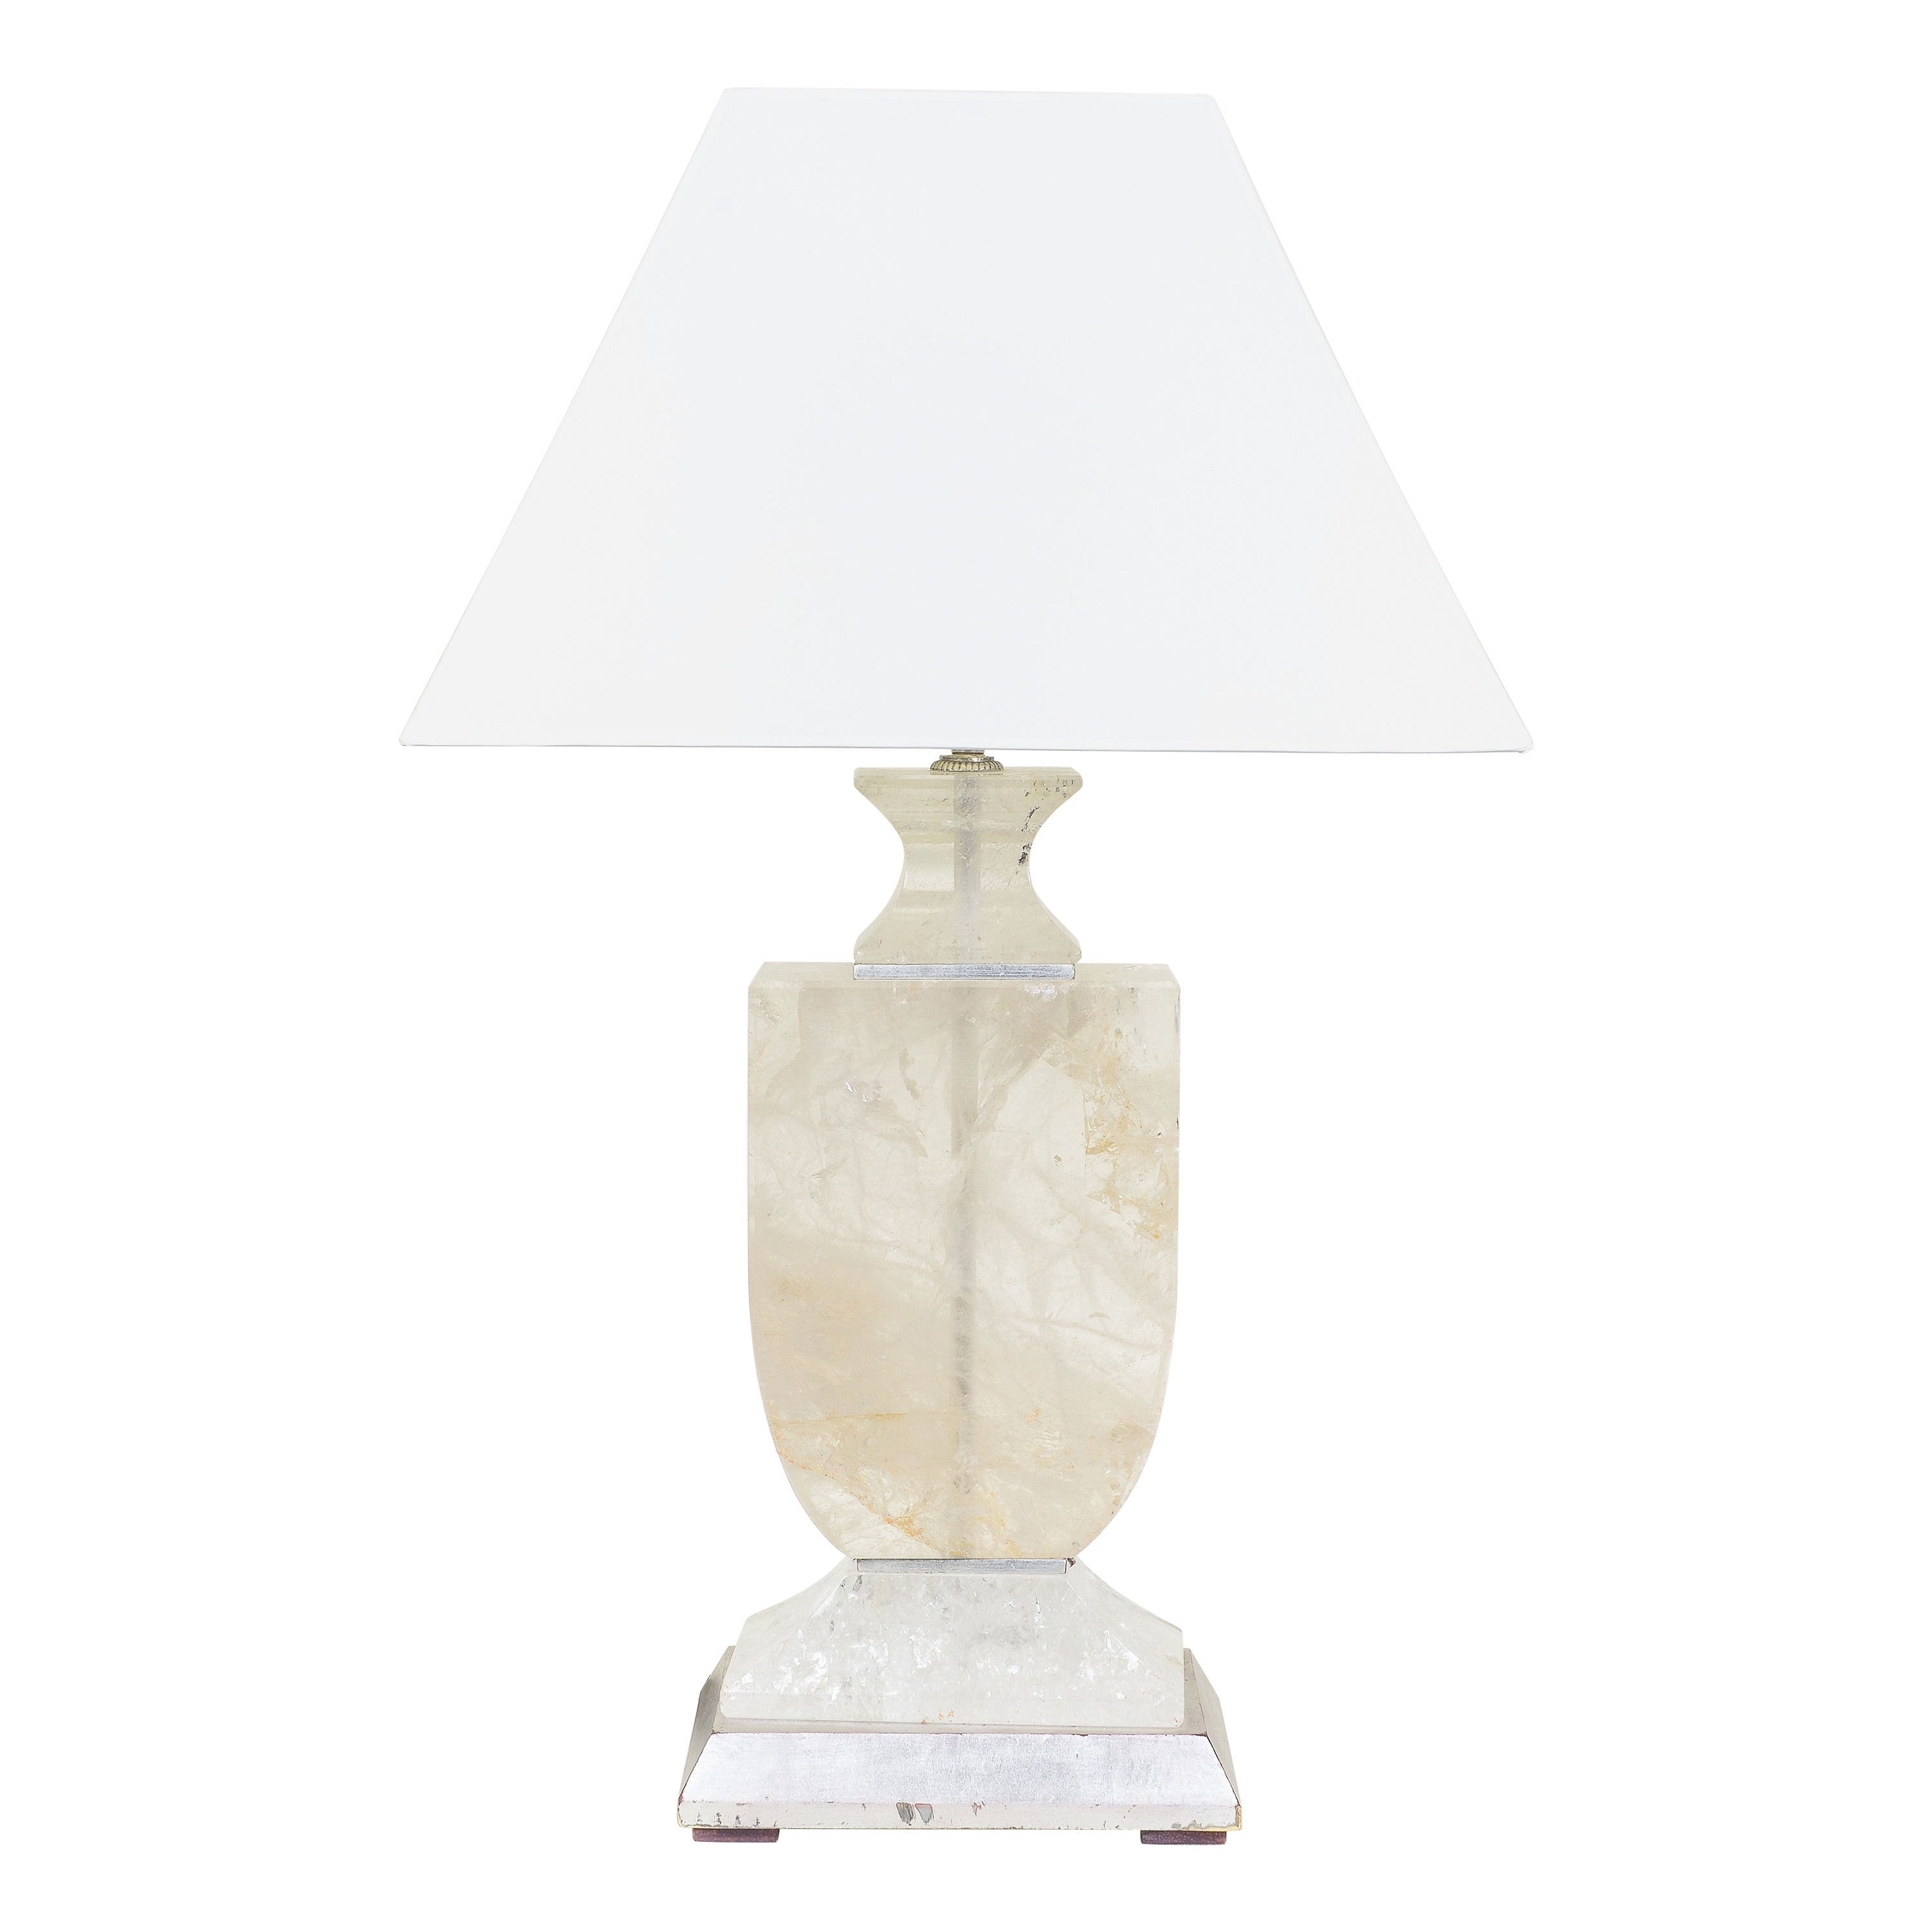 An Art Deco Style Rock Crystal Lamp